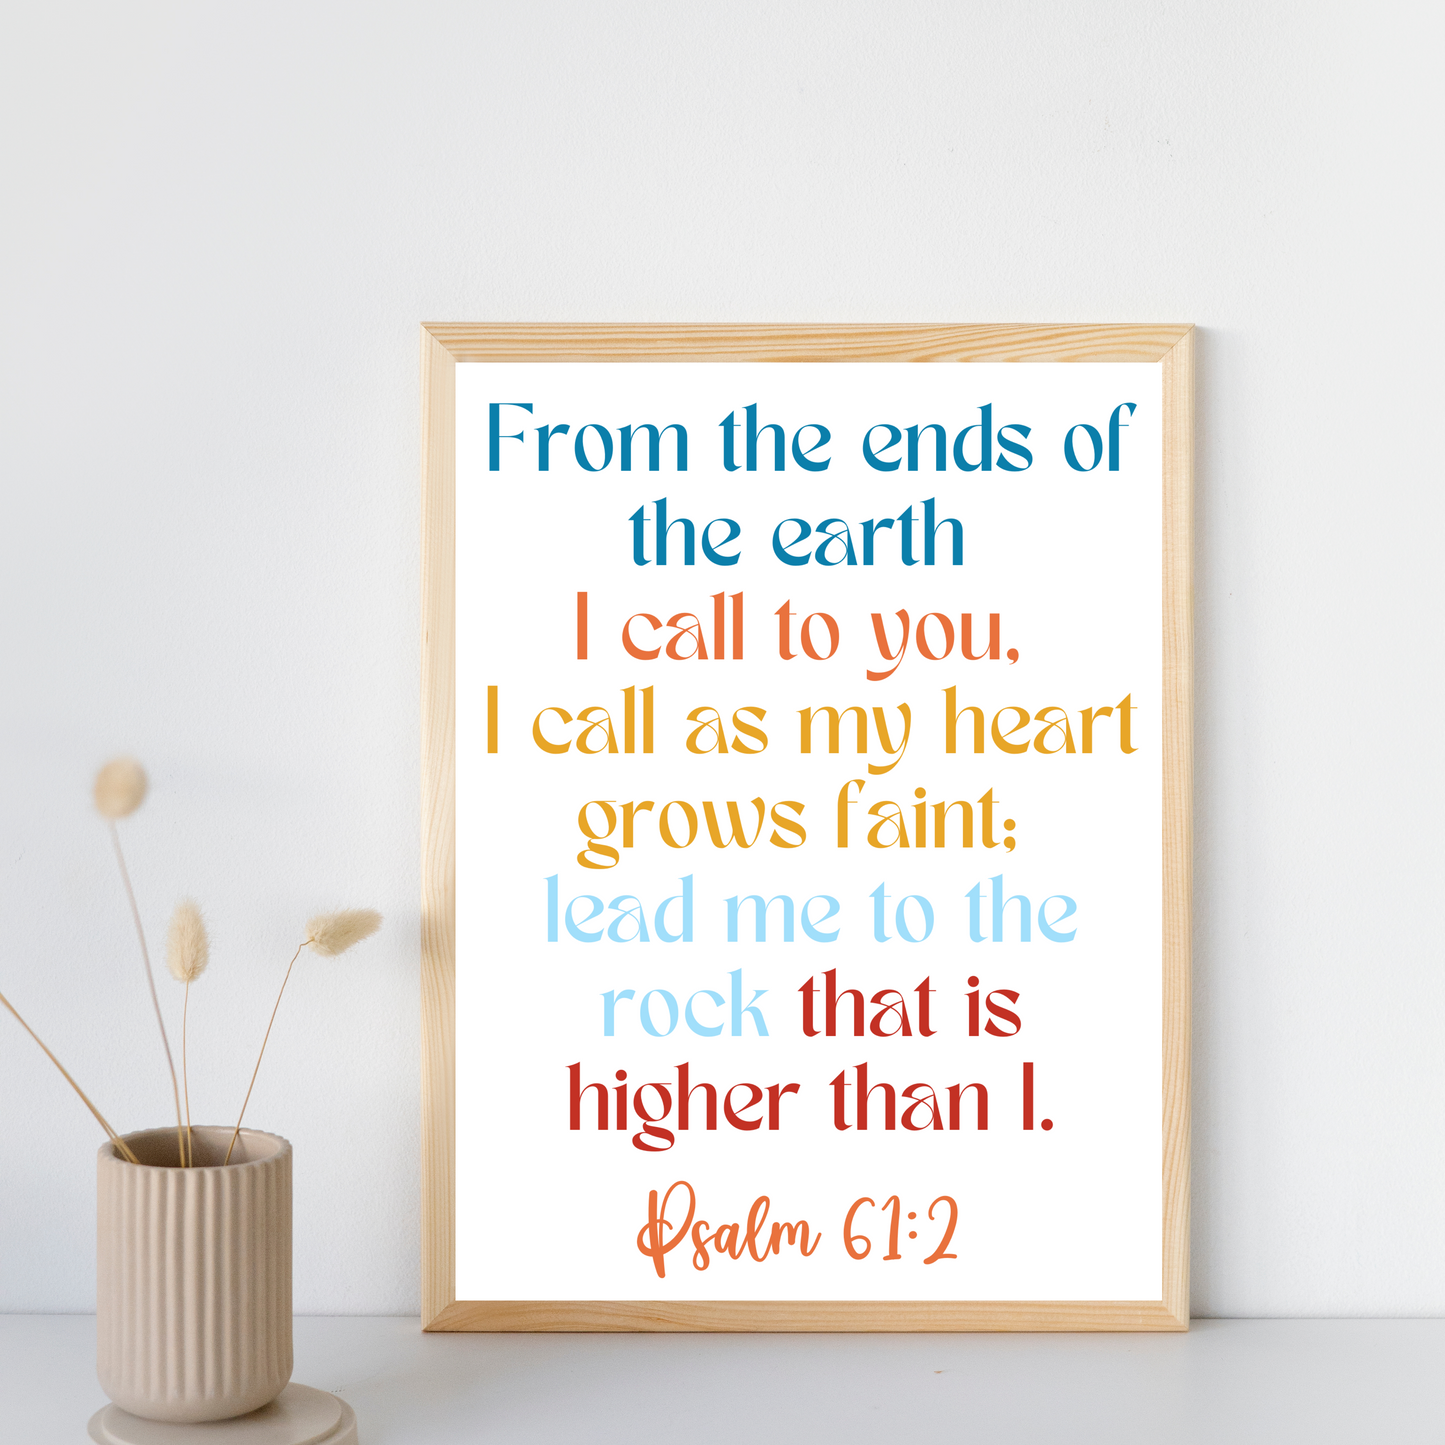 Psalm 61:2 Encouragement Wall Print - gracebyfaithandgrace